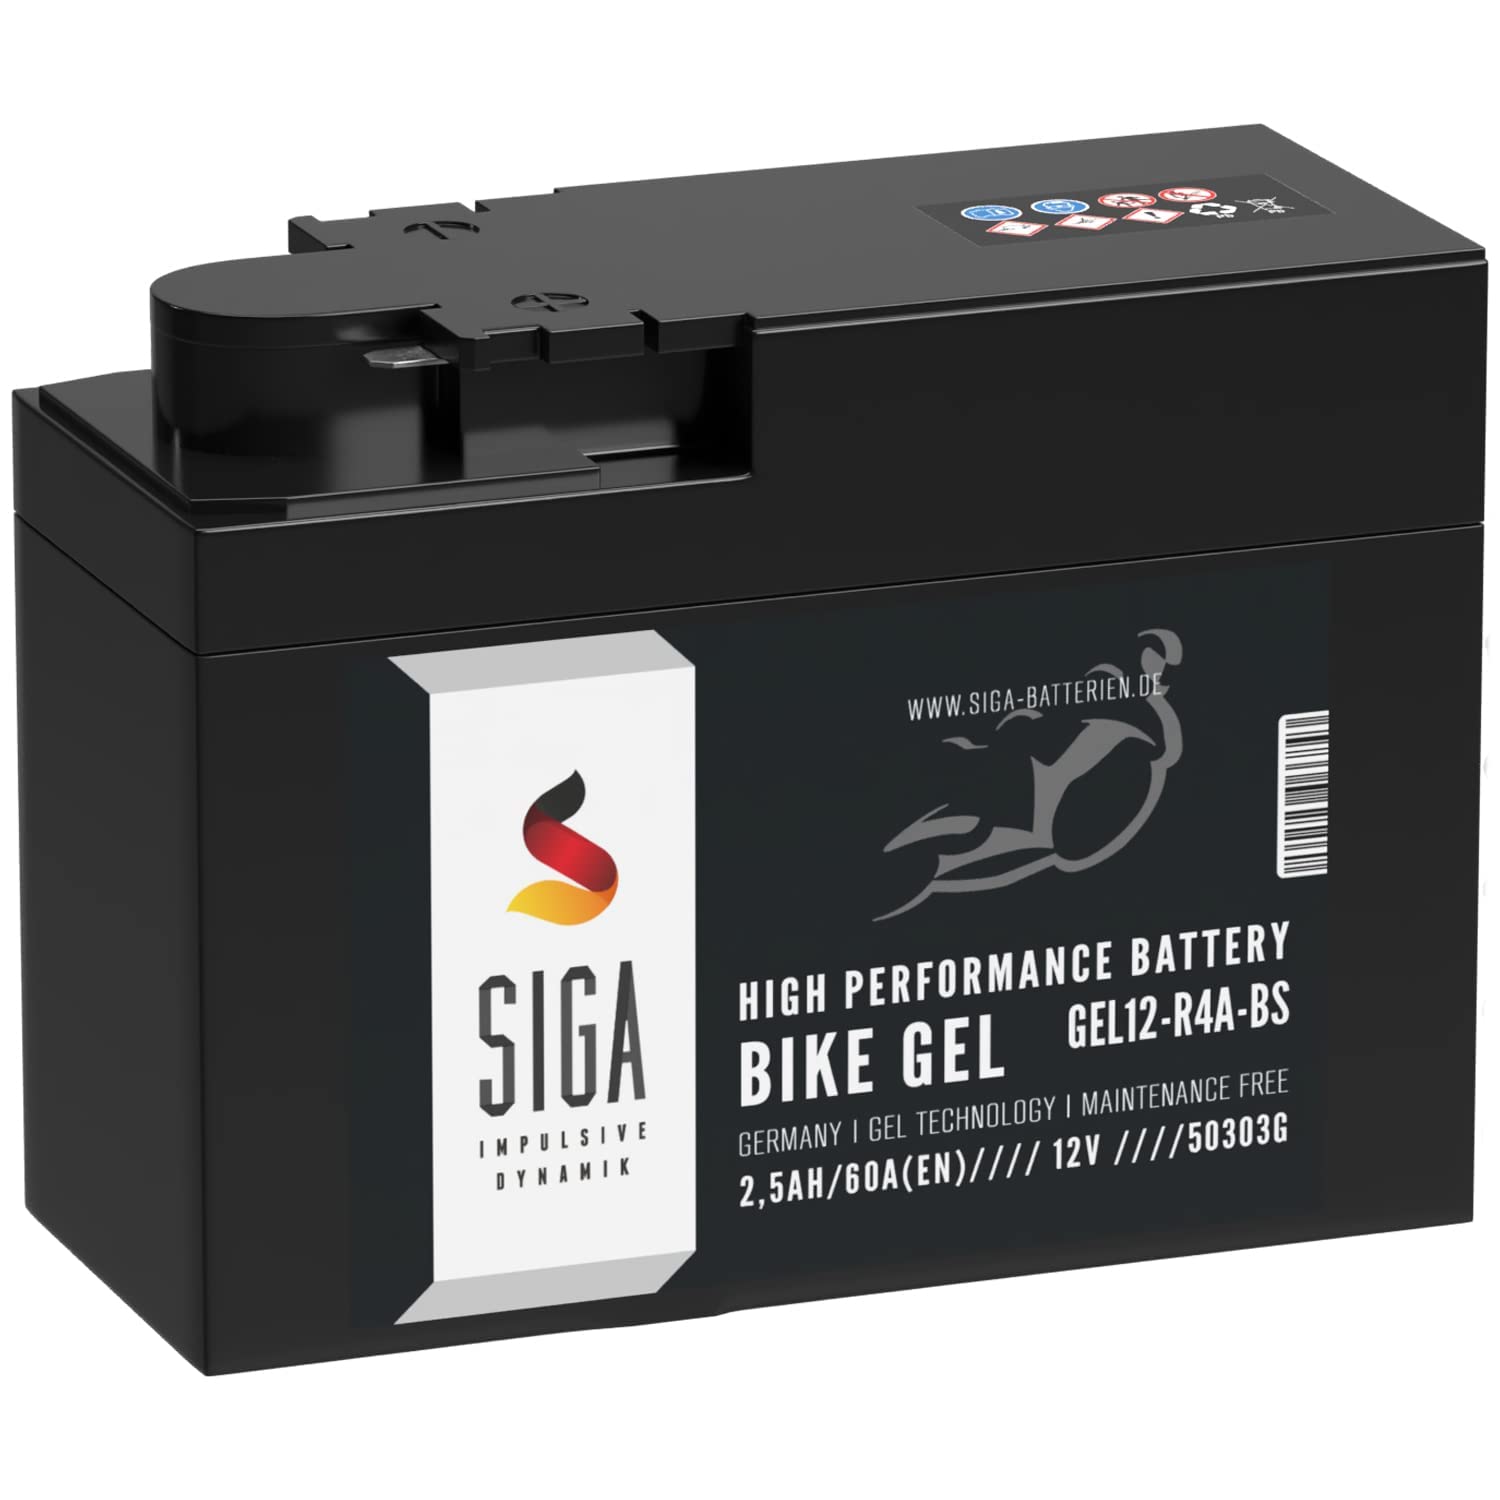 SIGA YTR4A-BS GEL Roller Batterie 12V 2,5Ah 60A/EN GEL12-R4A-BS GEL Batterie 12V Motorradbatterie entspricht 50303 ITX4A-BS YTX4A-BS auslaufsicher von SIGA IMPULSIVE DYNAMIK